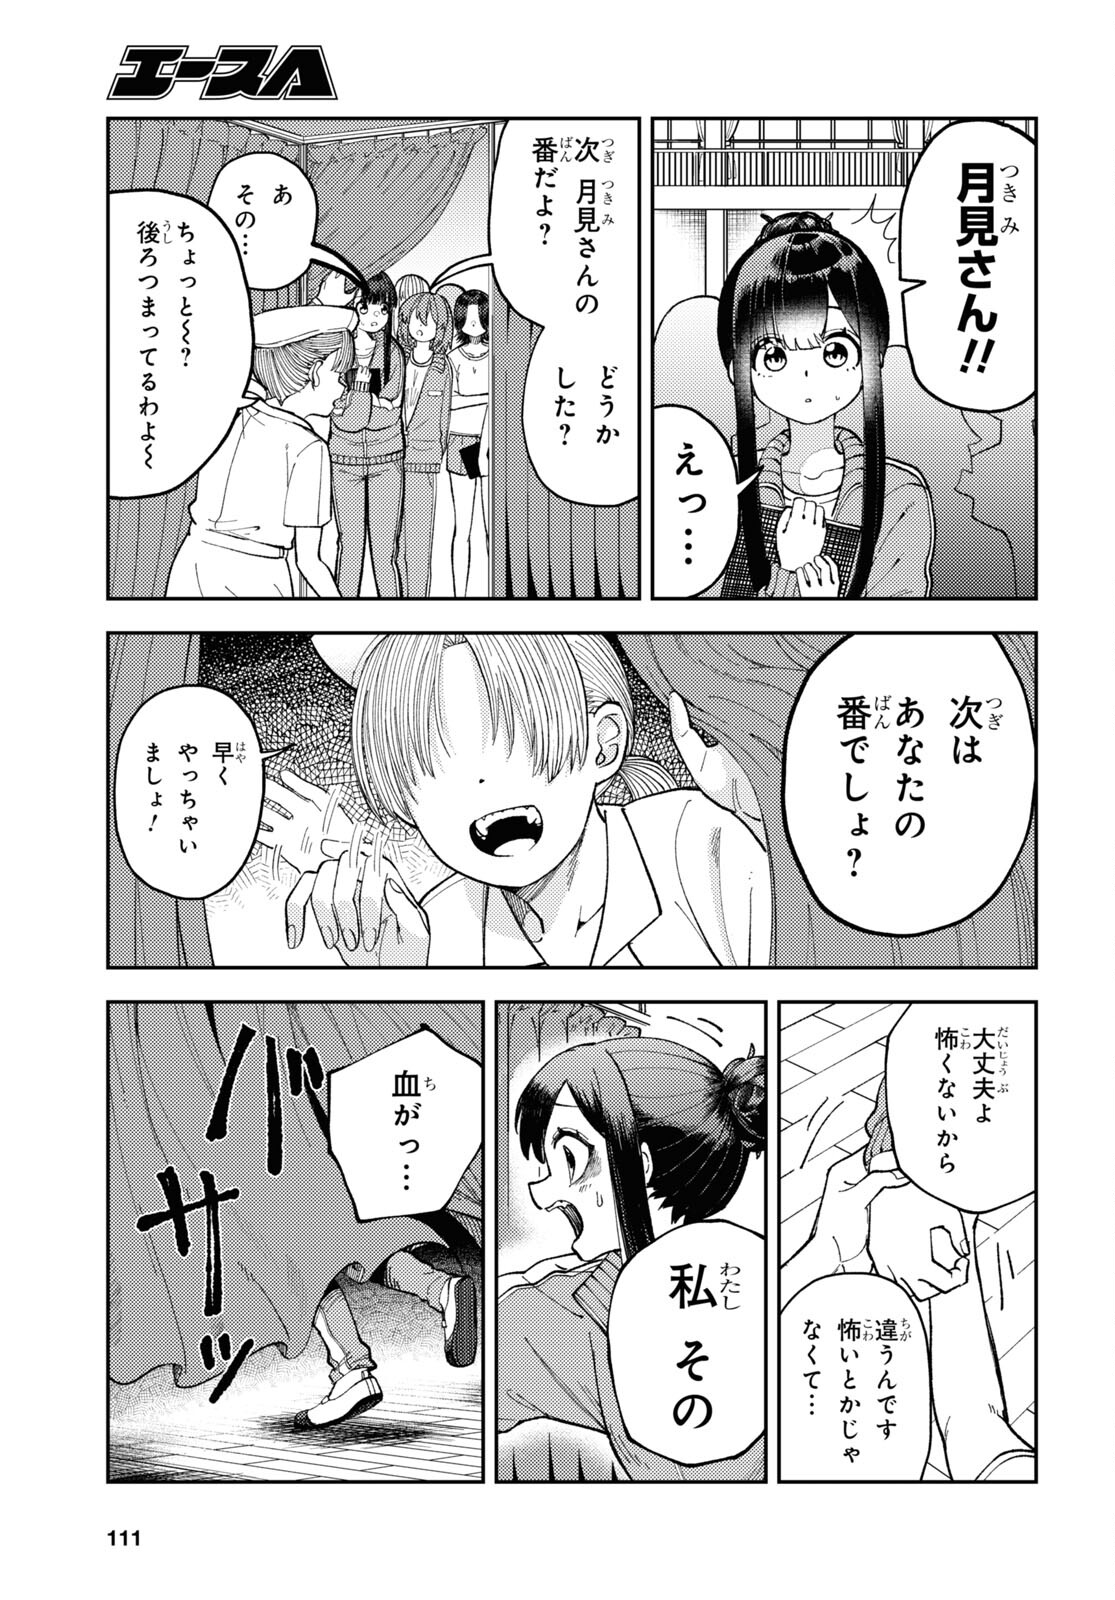 Garuru Girl - Chapter 3 - Page 25